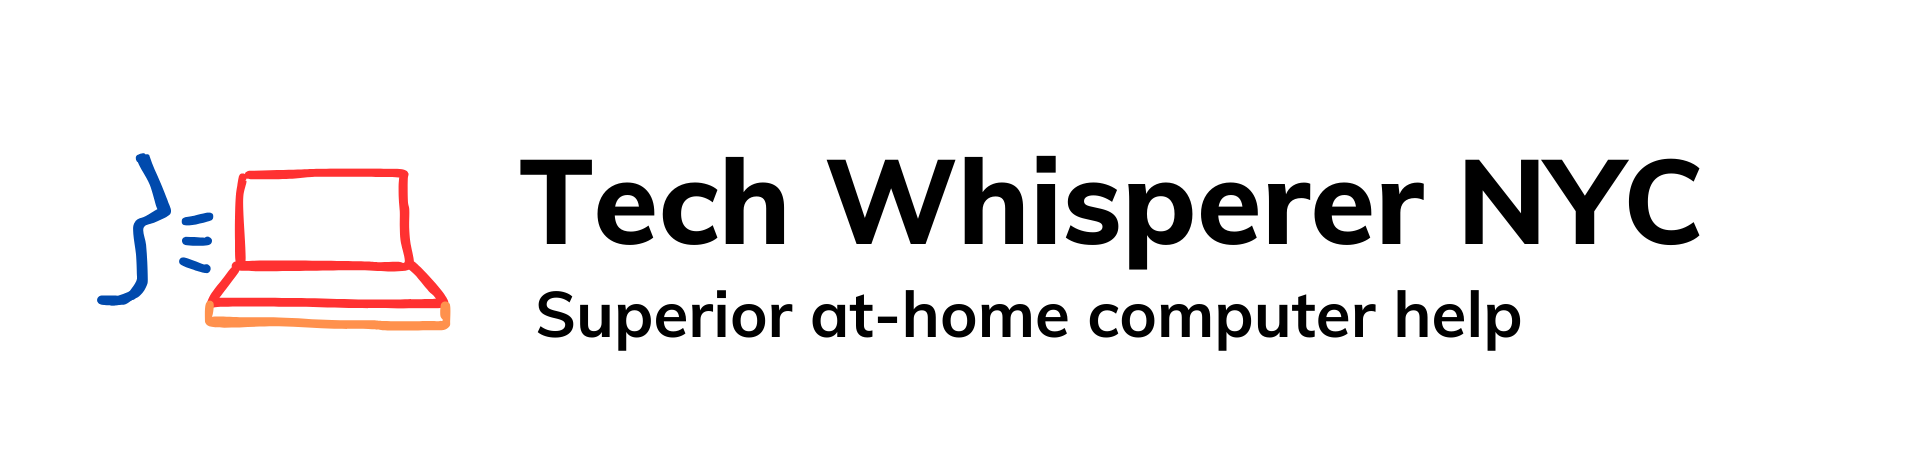 Tech Whisperer NYC